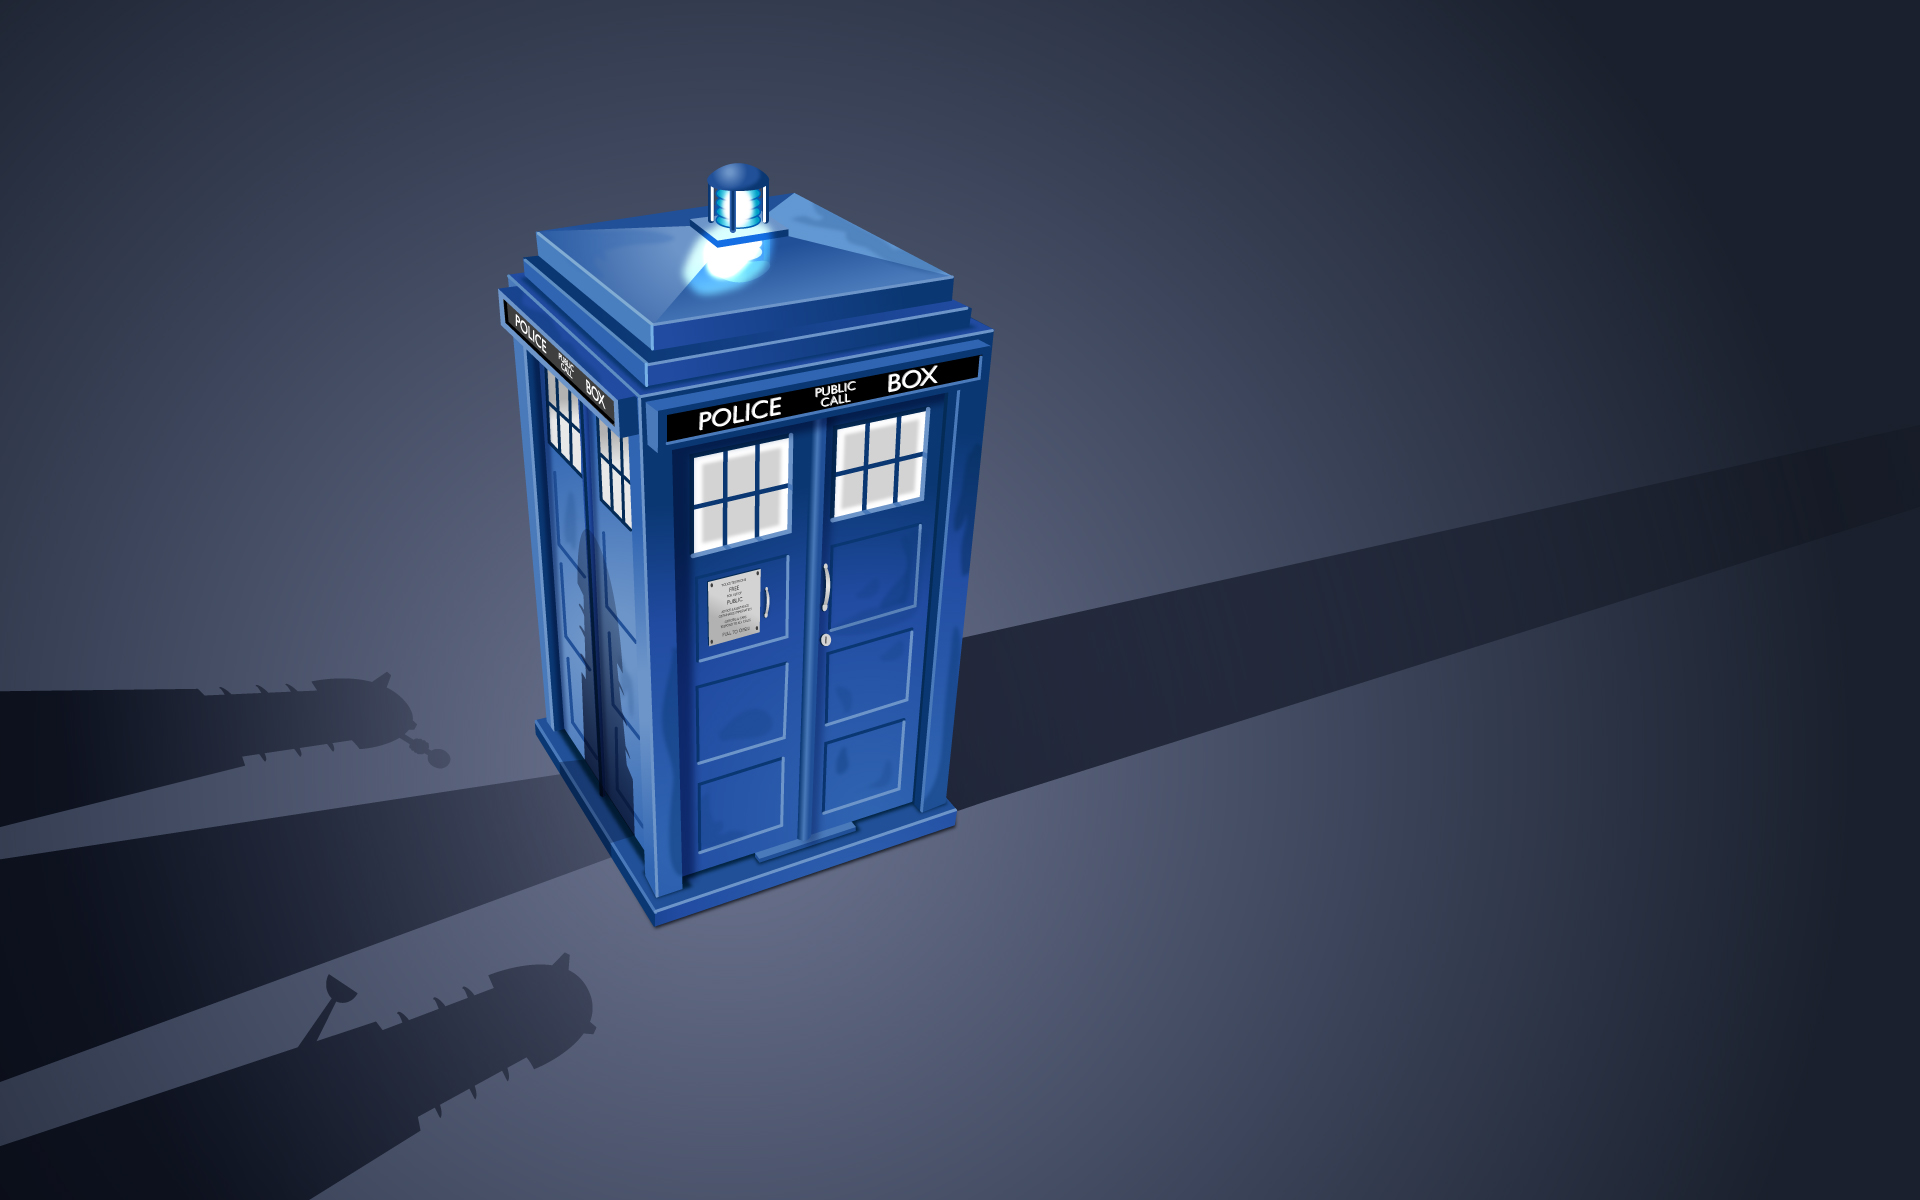 Doctor Who Puter Wallpaper Desktop Background Id